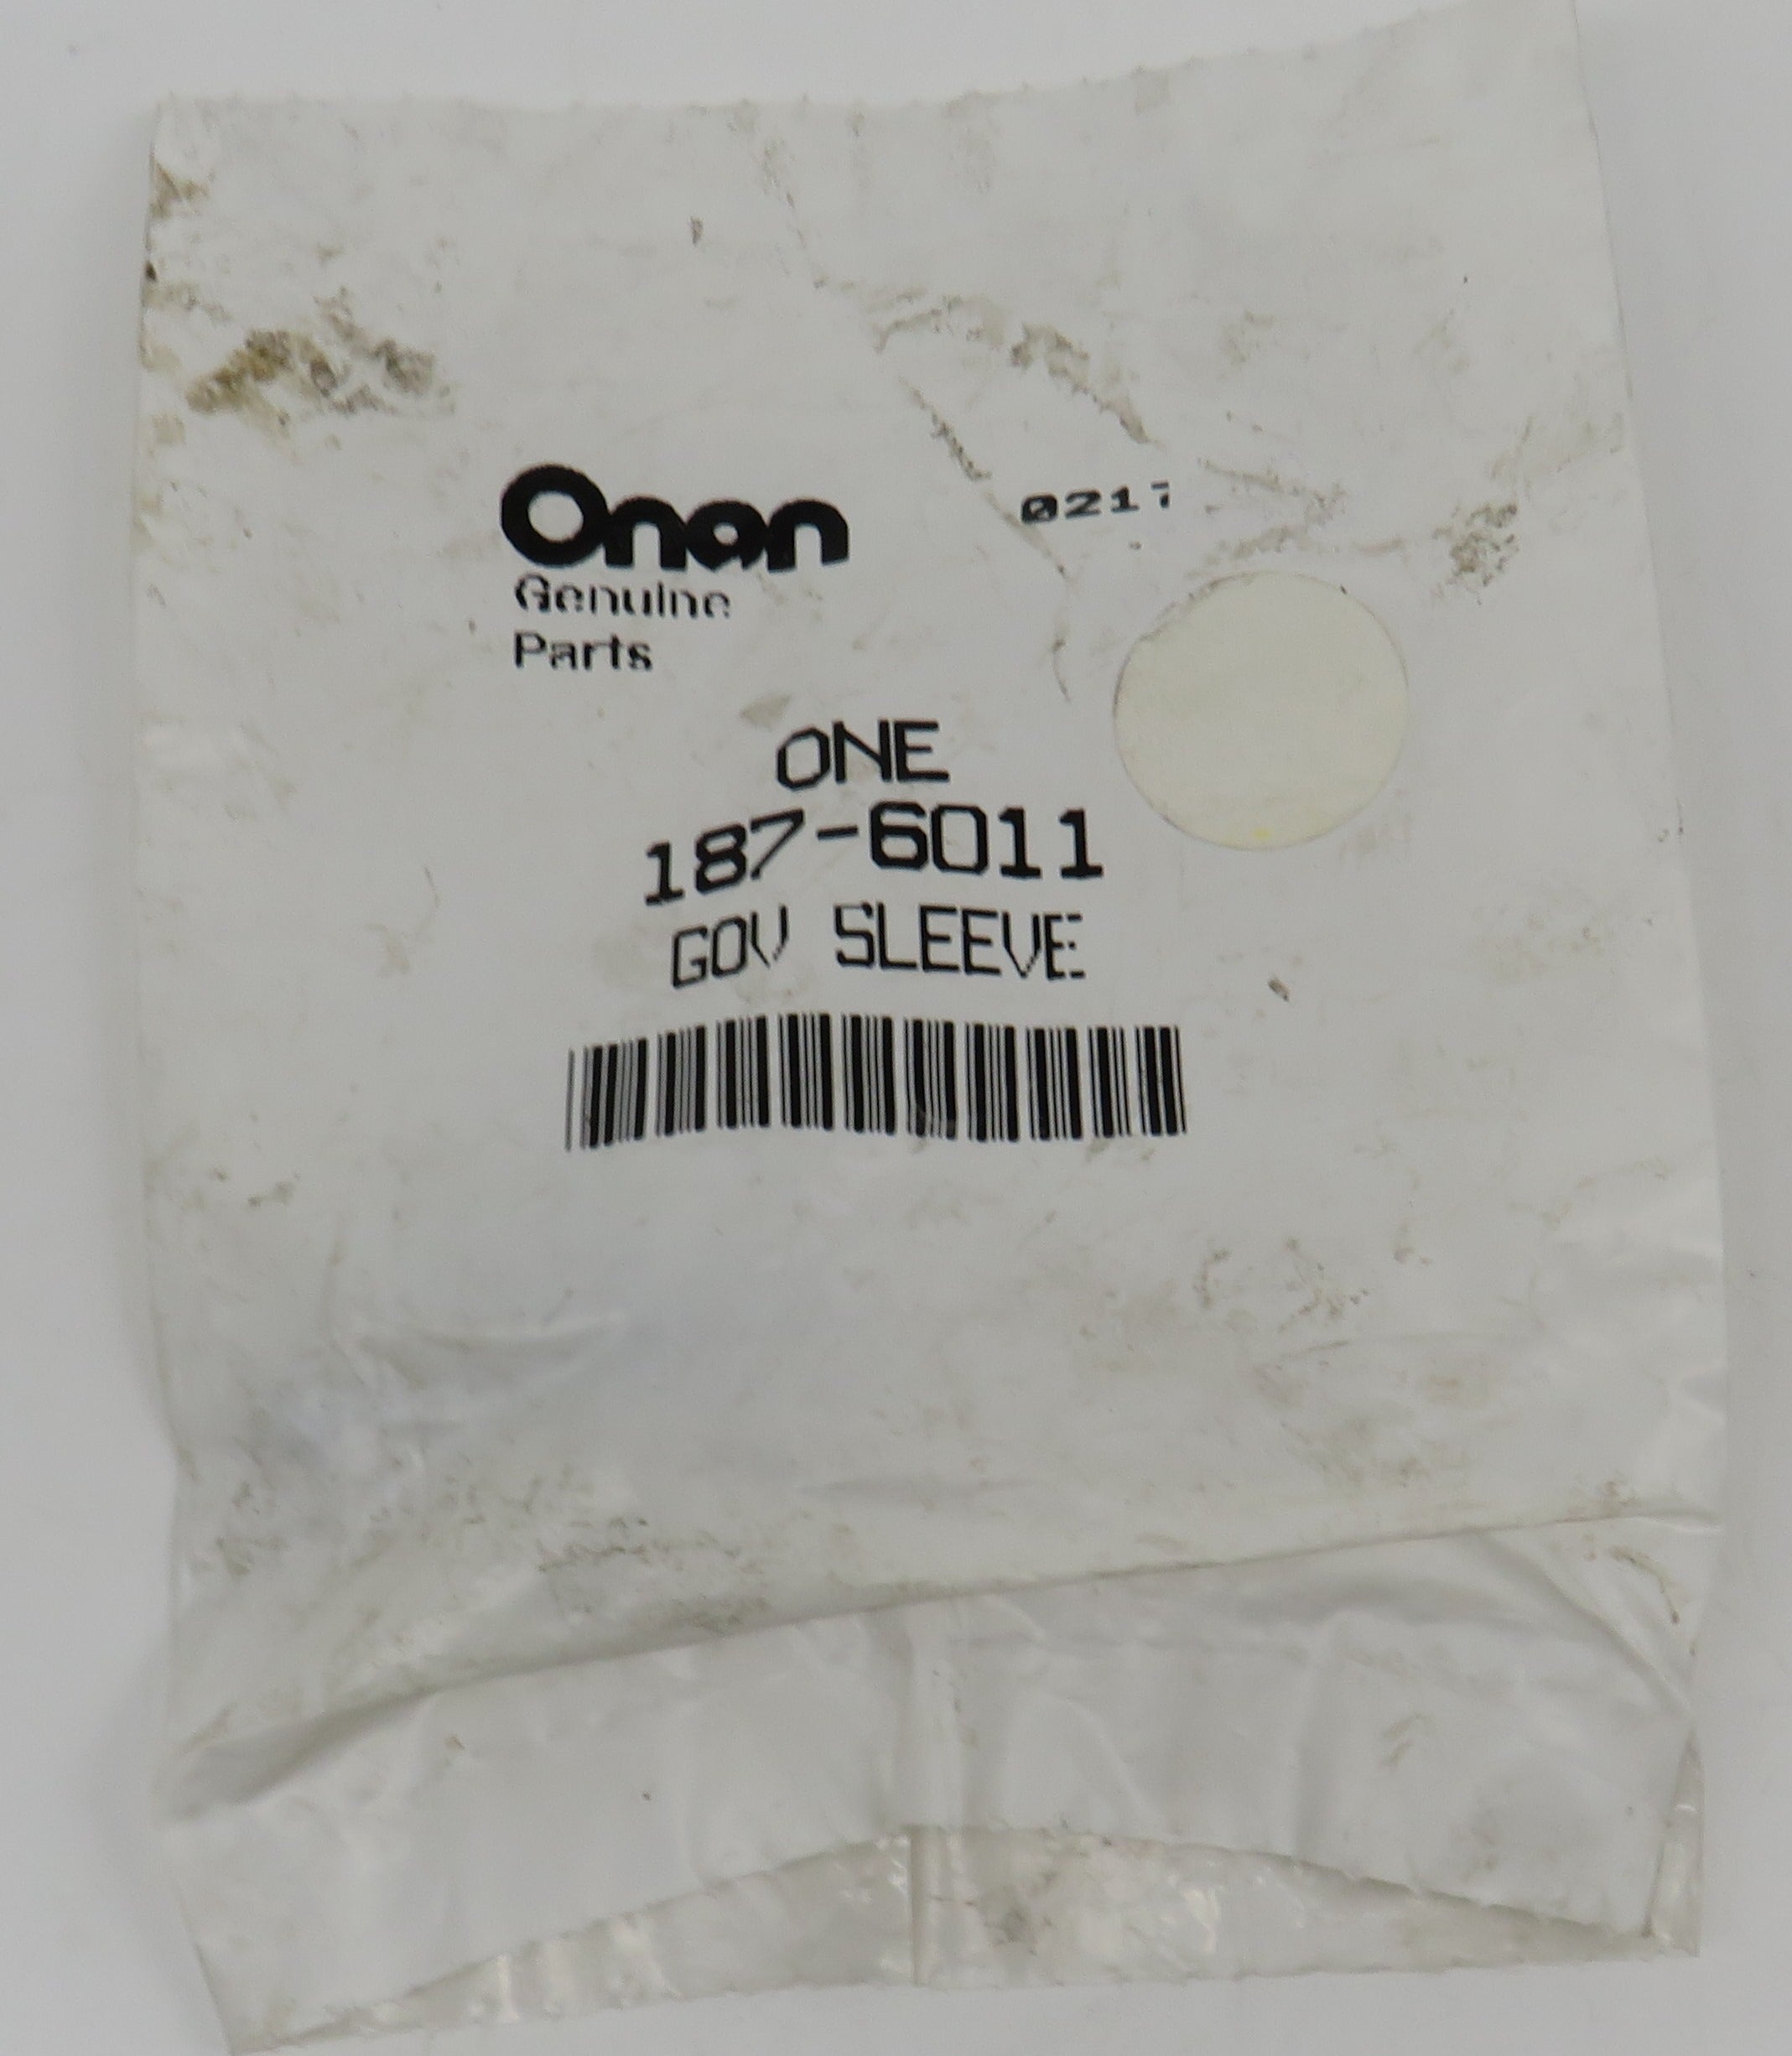 187-6011 Onan Governor Sleeve (Part of Crankcase Group) OBSOLETE for EH64 Engine Welder Application (Onan Performer OHV220) Robin Part#263-41901-03 